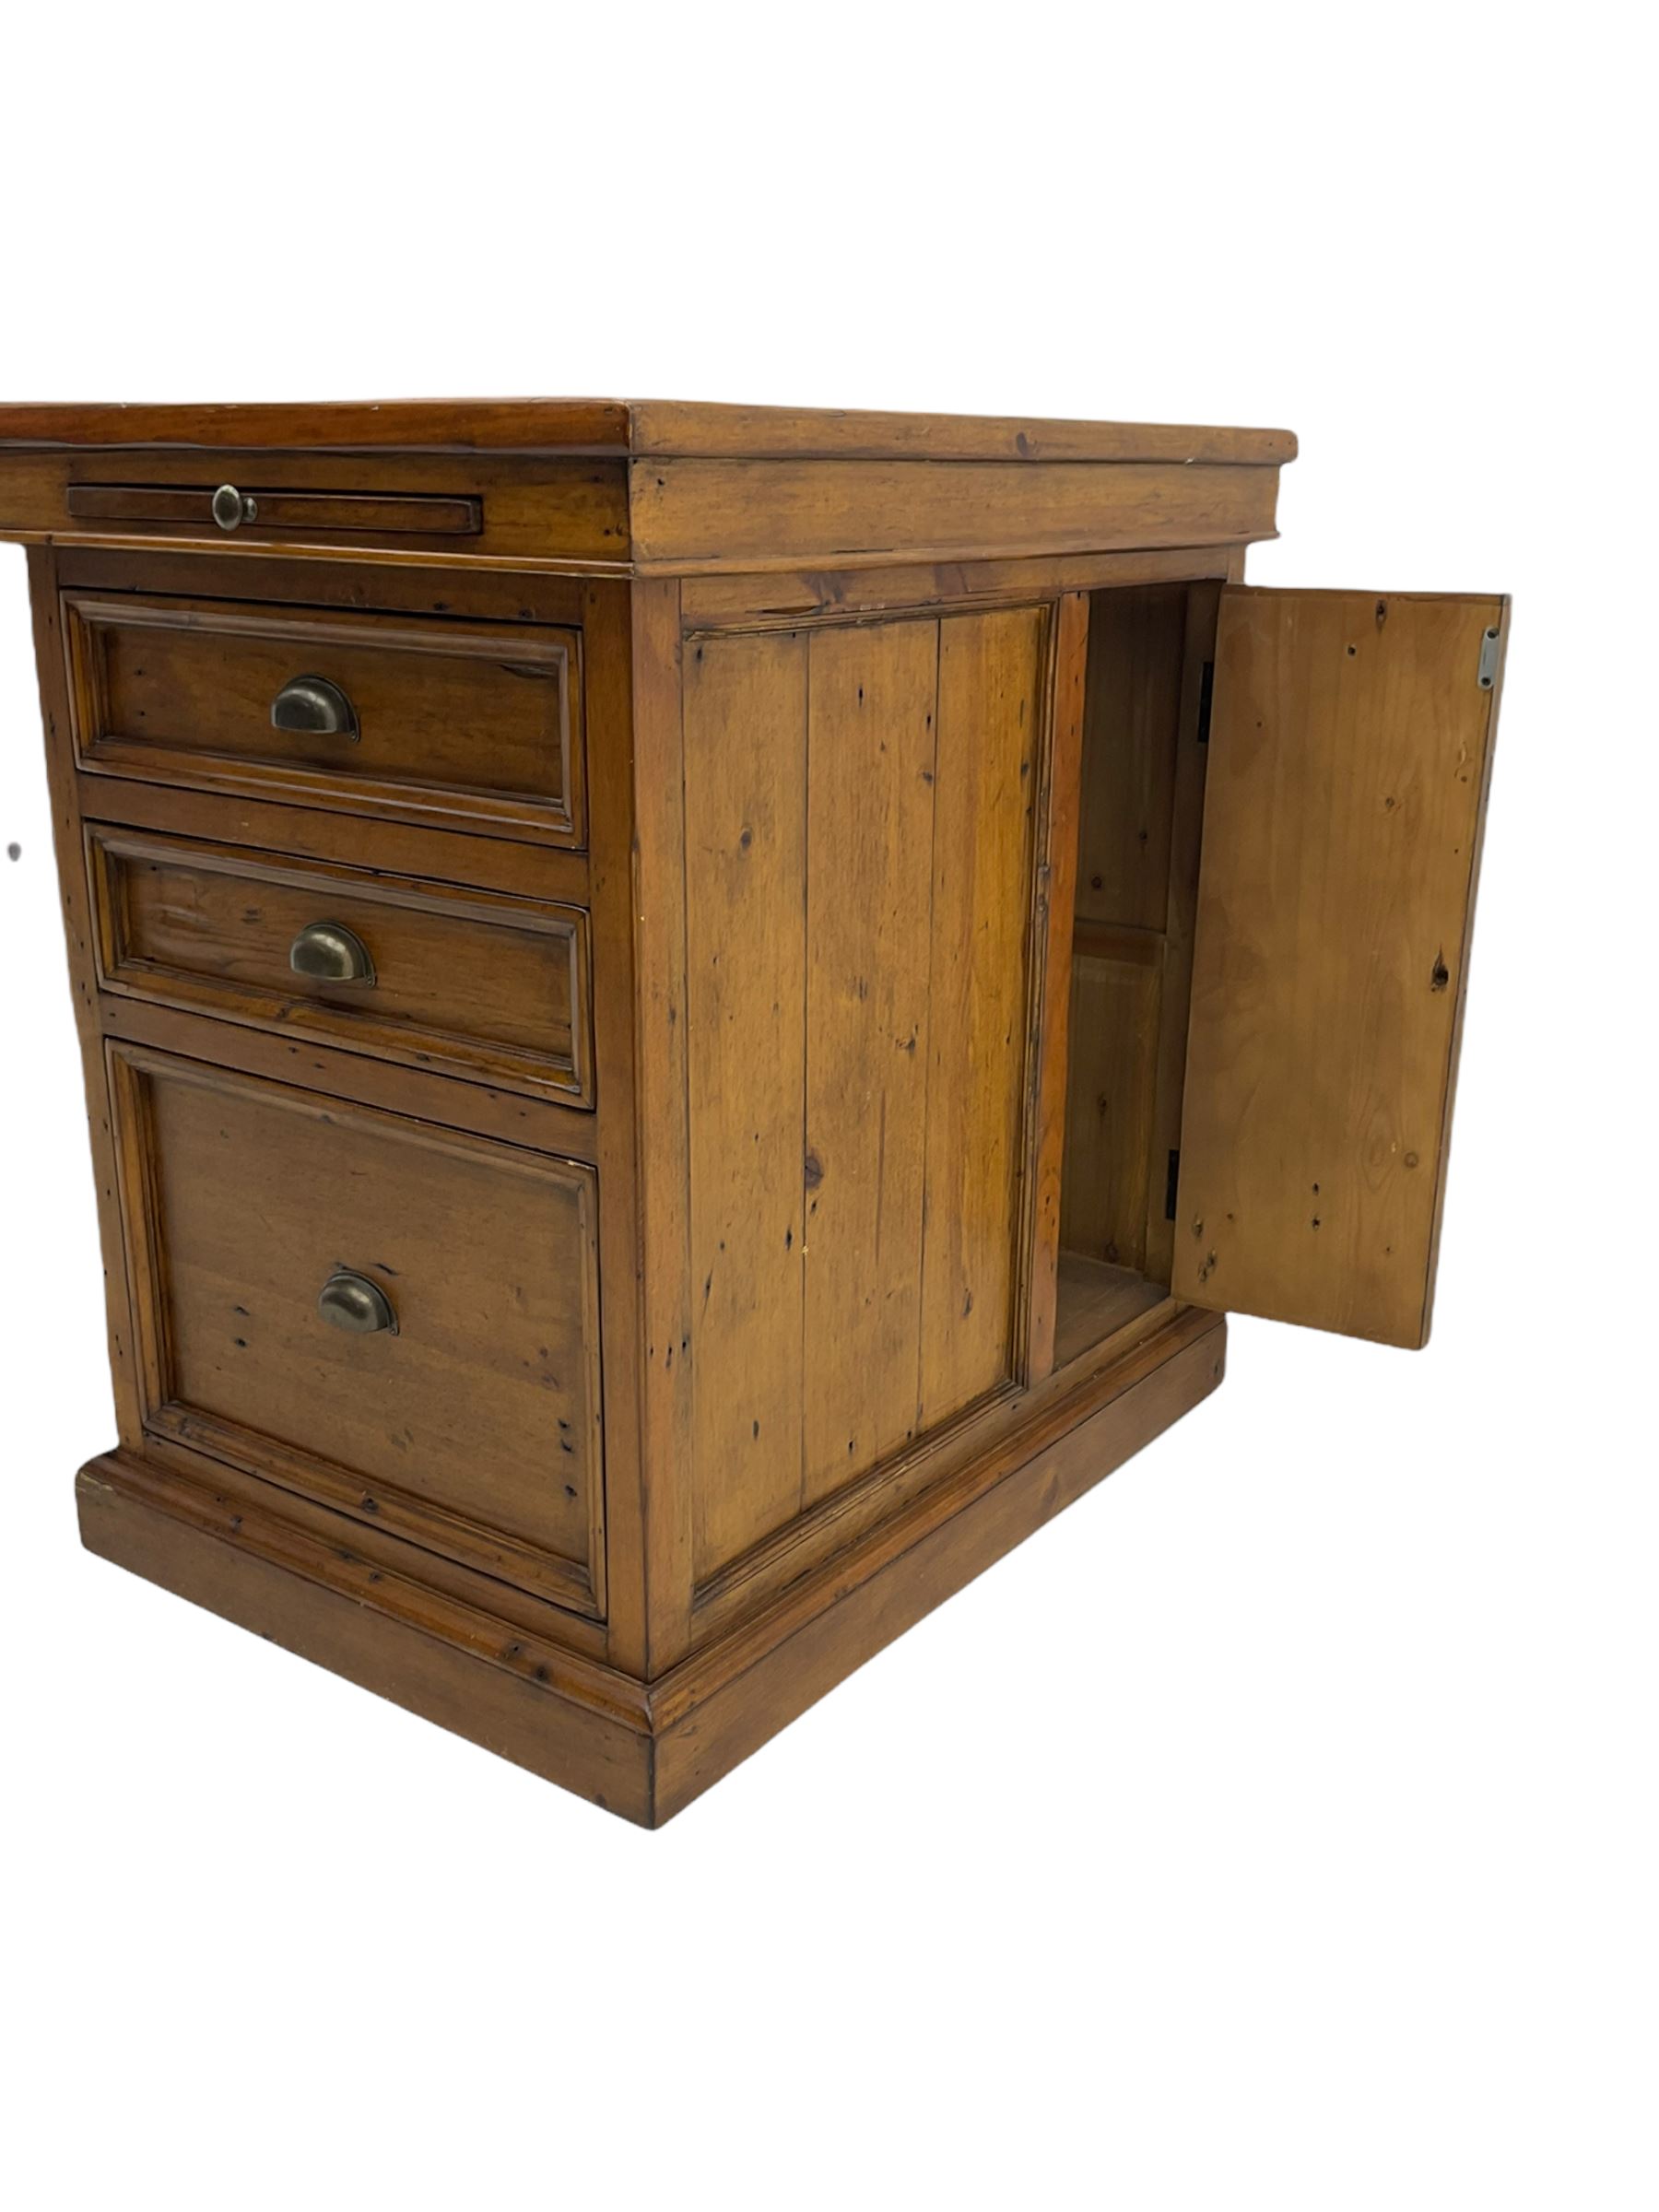 Barker & Stonehouse - Villiers reclaimed eastern pine twin pedestal desk - Image 4 of 8